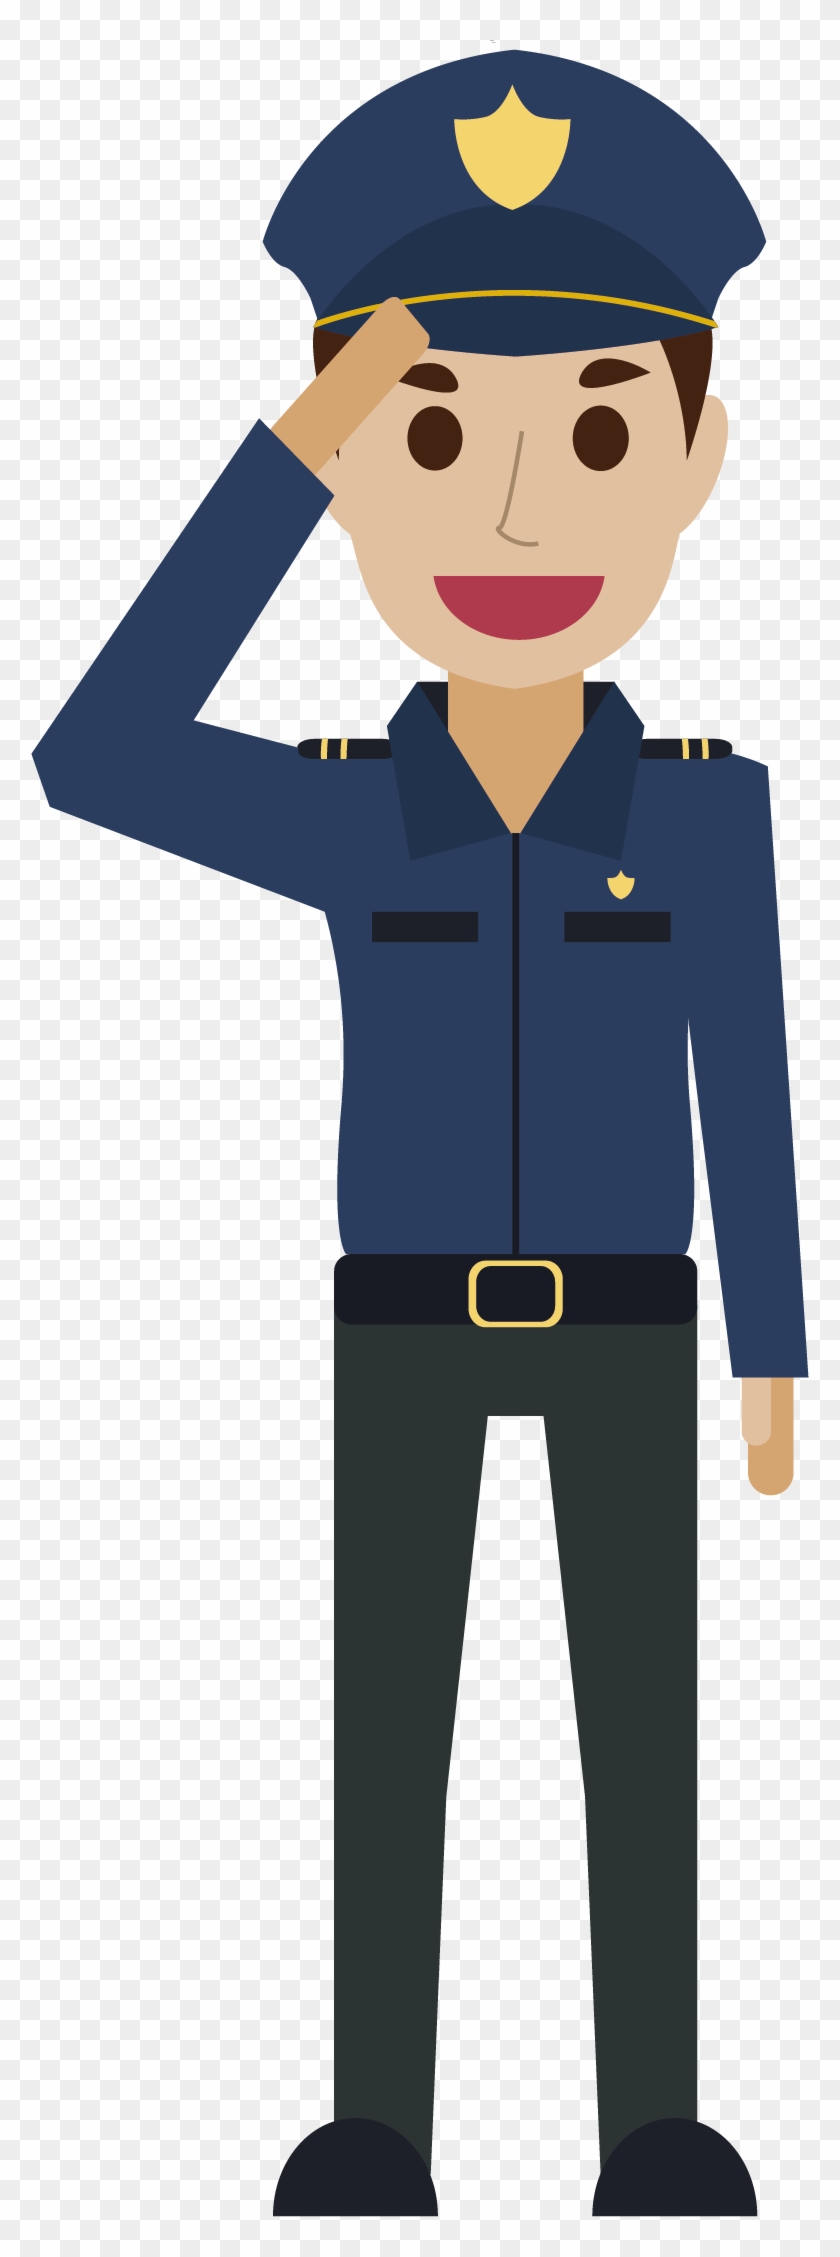 Police Officer Salute Clip Art - Police Officer Salute Clip Art #560282